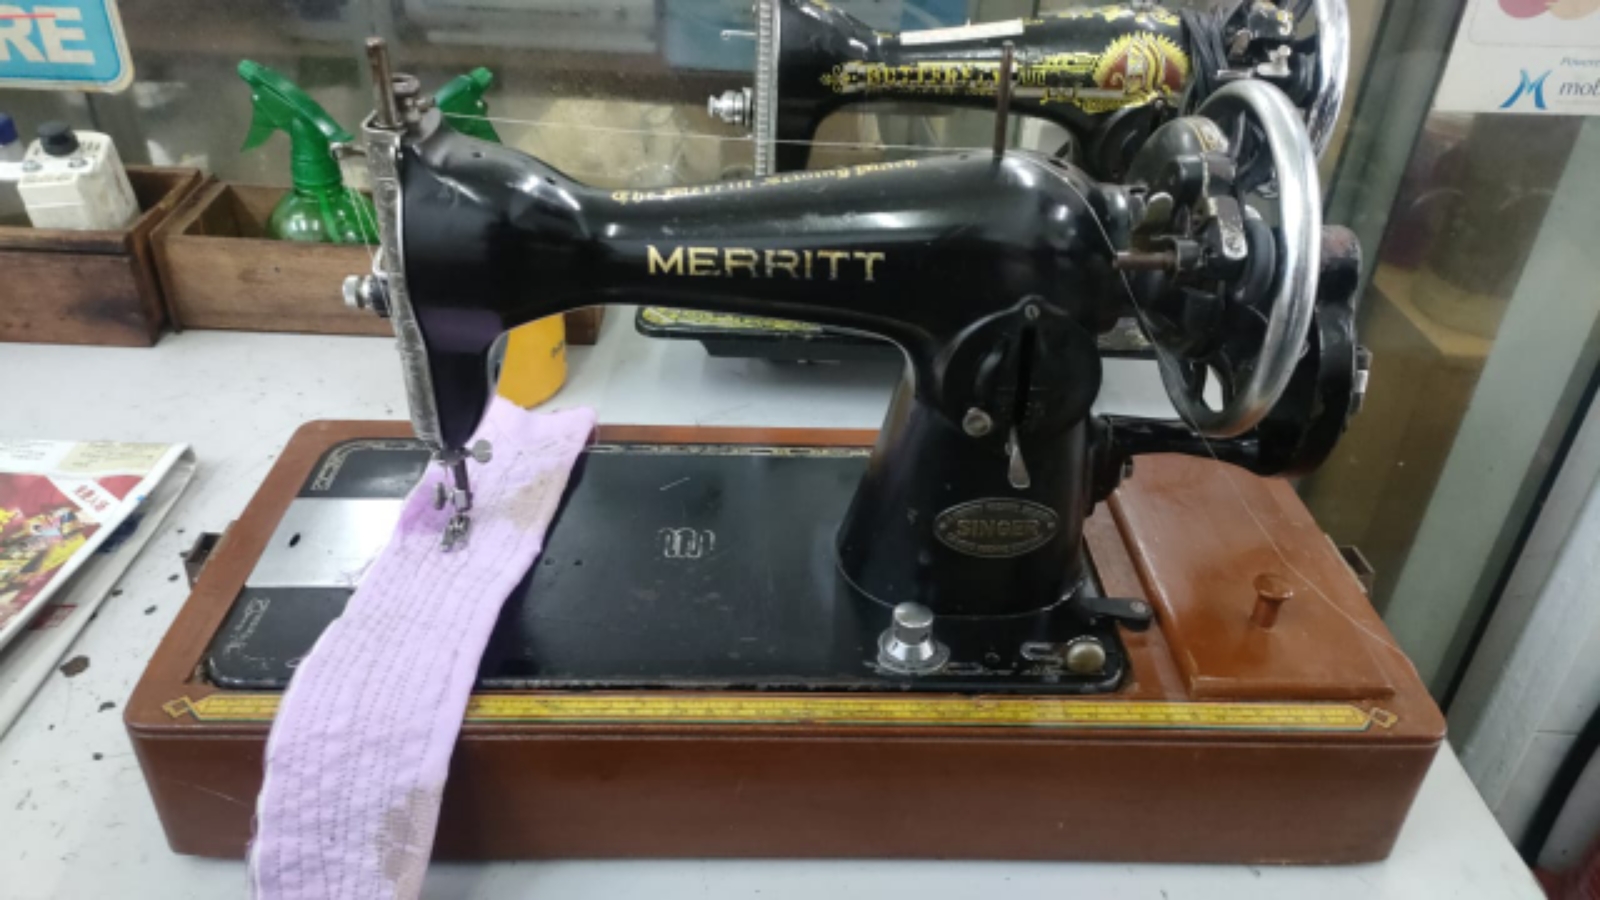 MERRITT ANTIQUE MANUAL HANDEH SEWING MACHINE